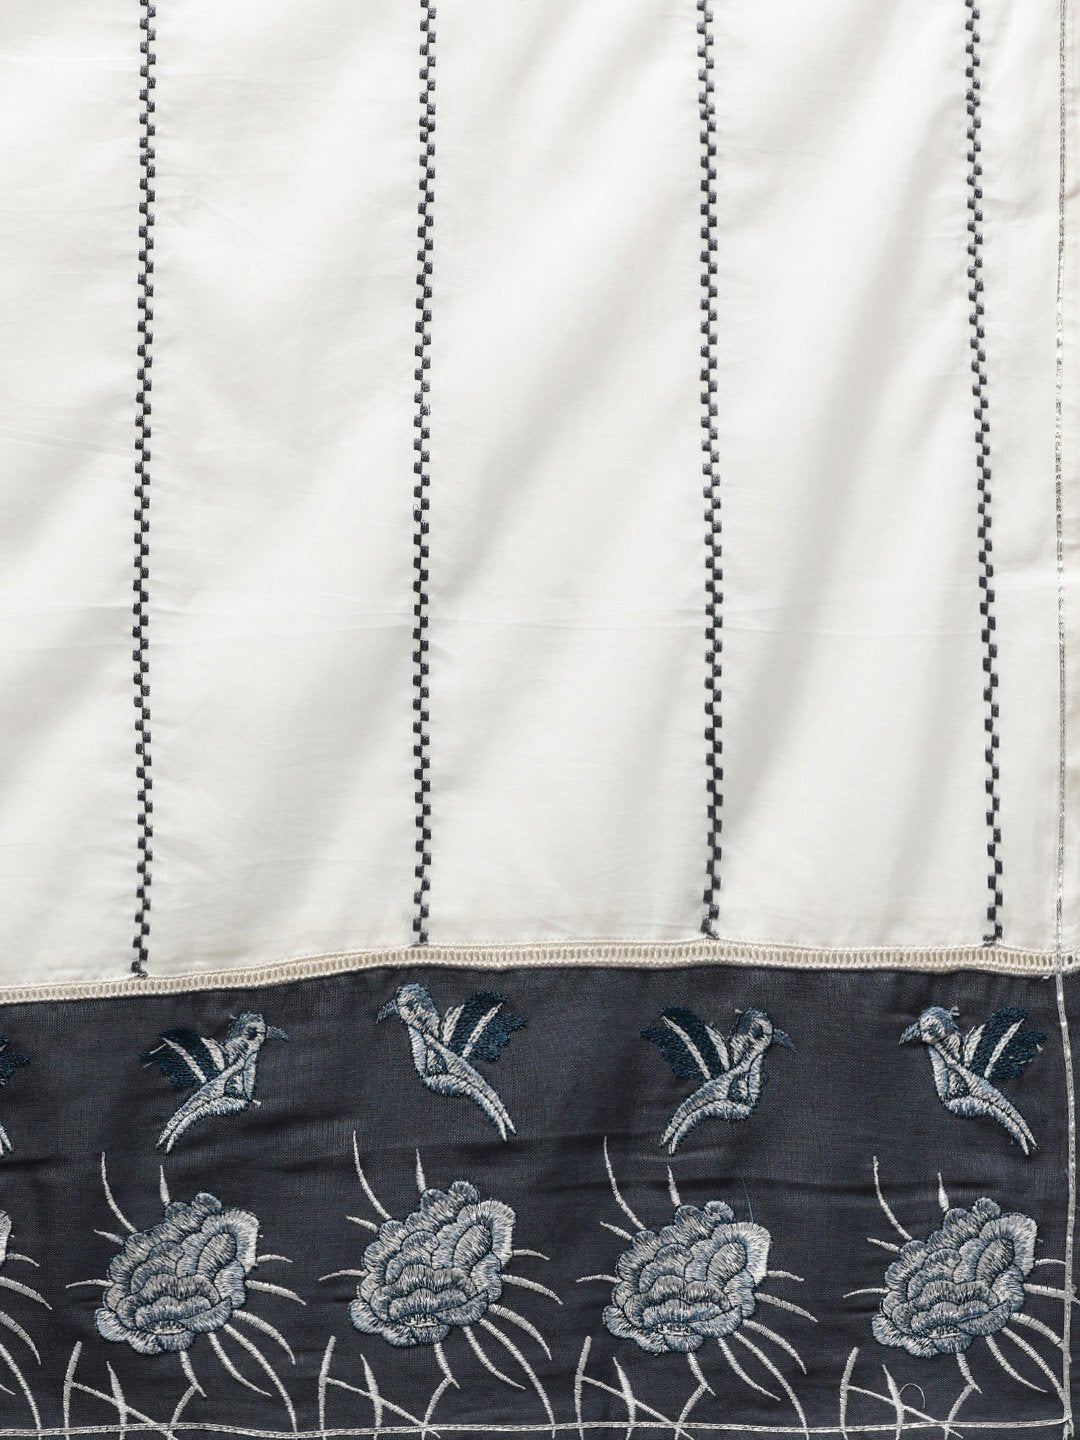 Ishin Women's Cotton Grey Embroidered A-Line Kurta Palazzo Dupatta Set